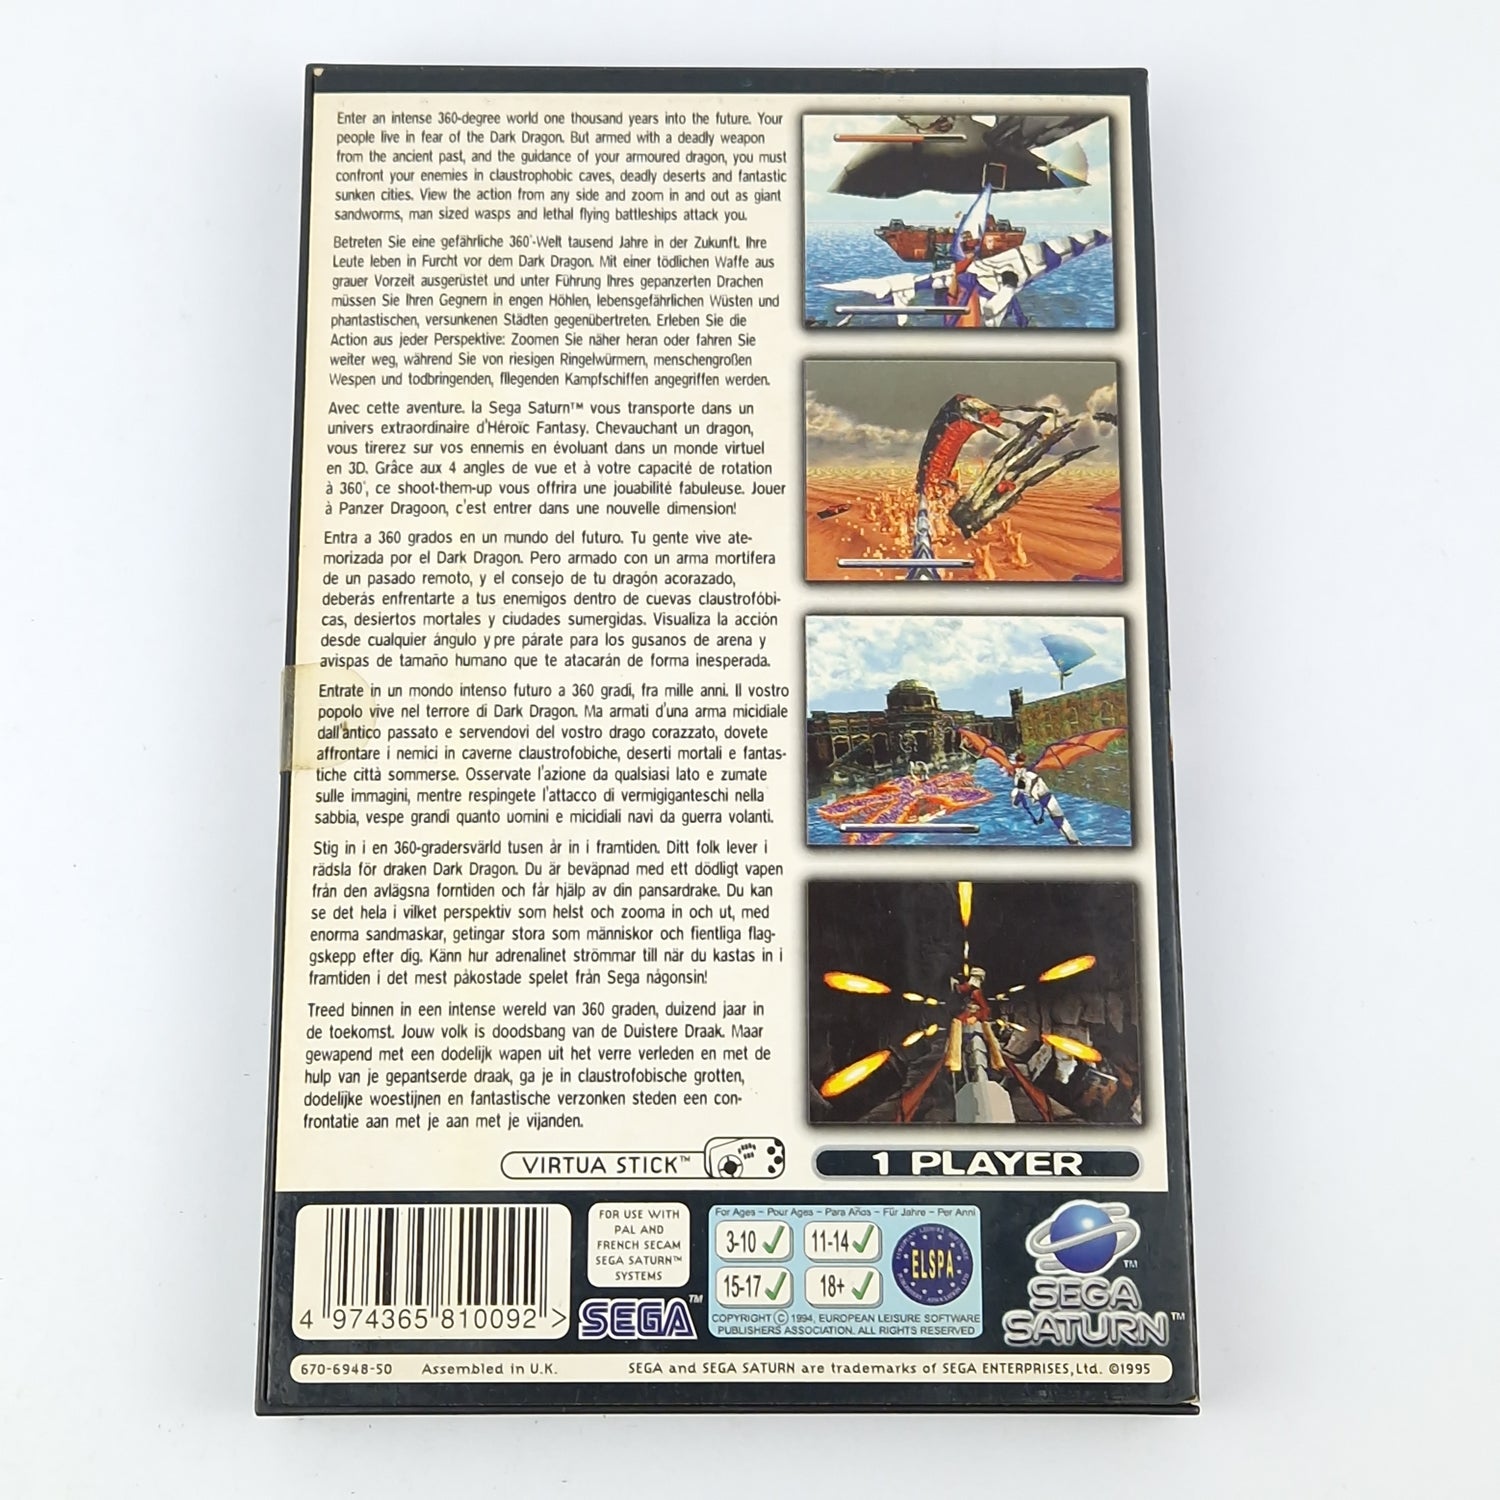 Sega Saturn Game: Panzer Dragoon - CD Instructions OVP / Disk PAL Game